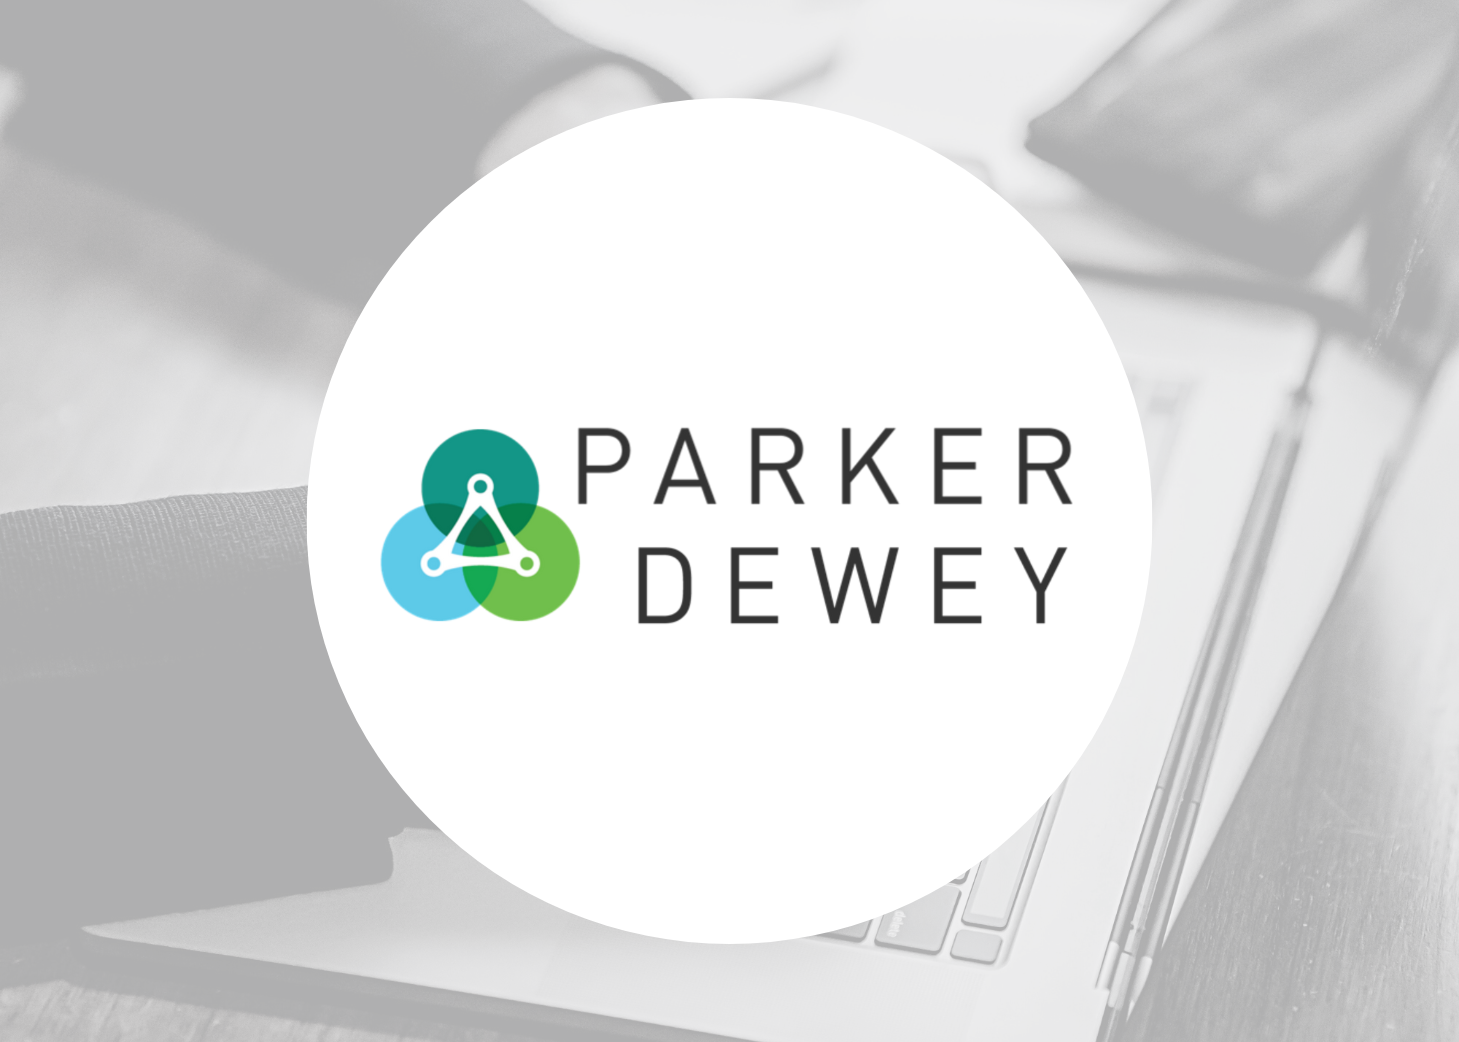 Parker Dewey  Parker Dewey